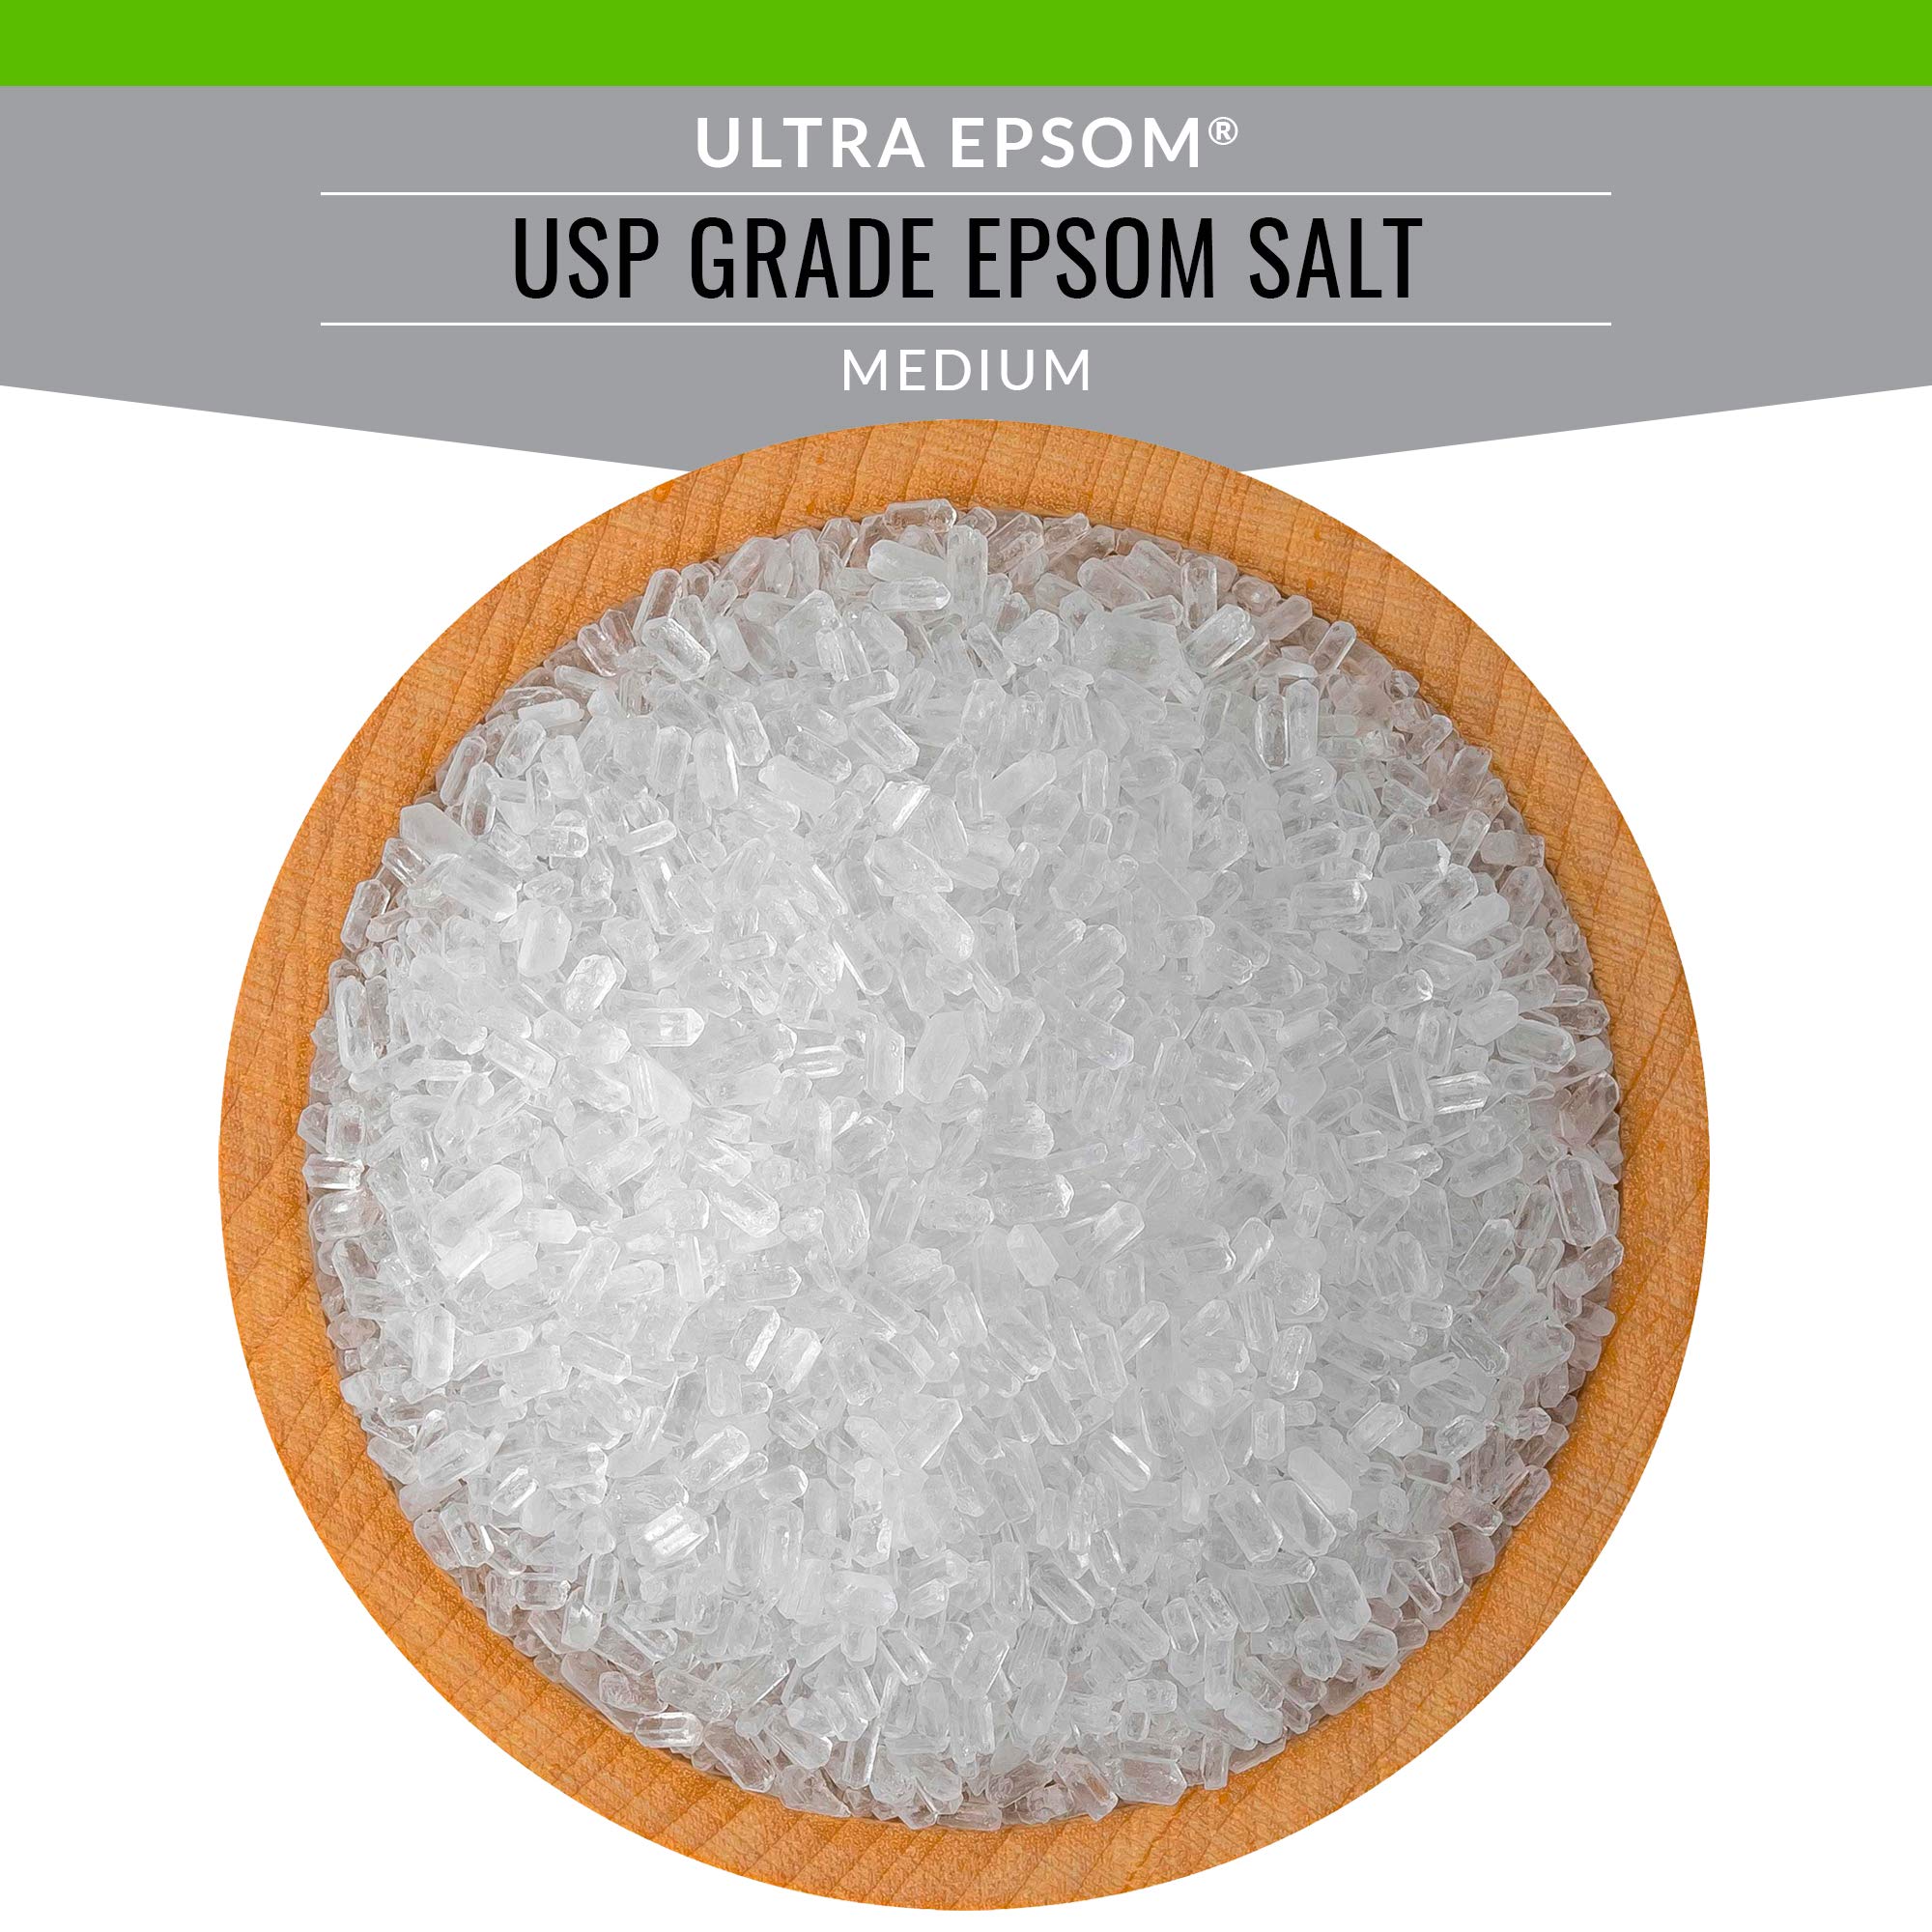 SaltWorks Ultra Epsom Bath Salt, Unscented, Medium Grain, 5 Pound Bag